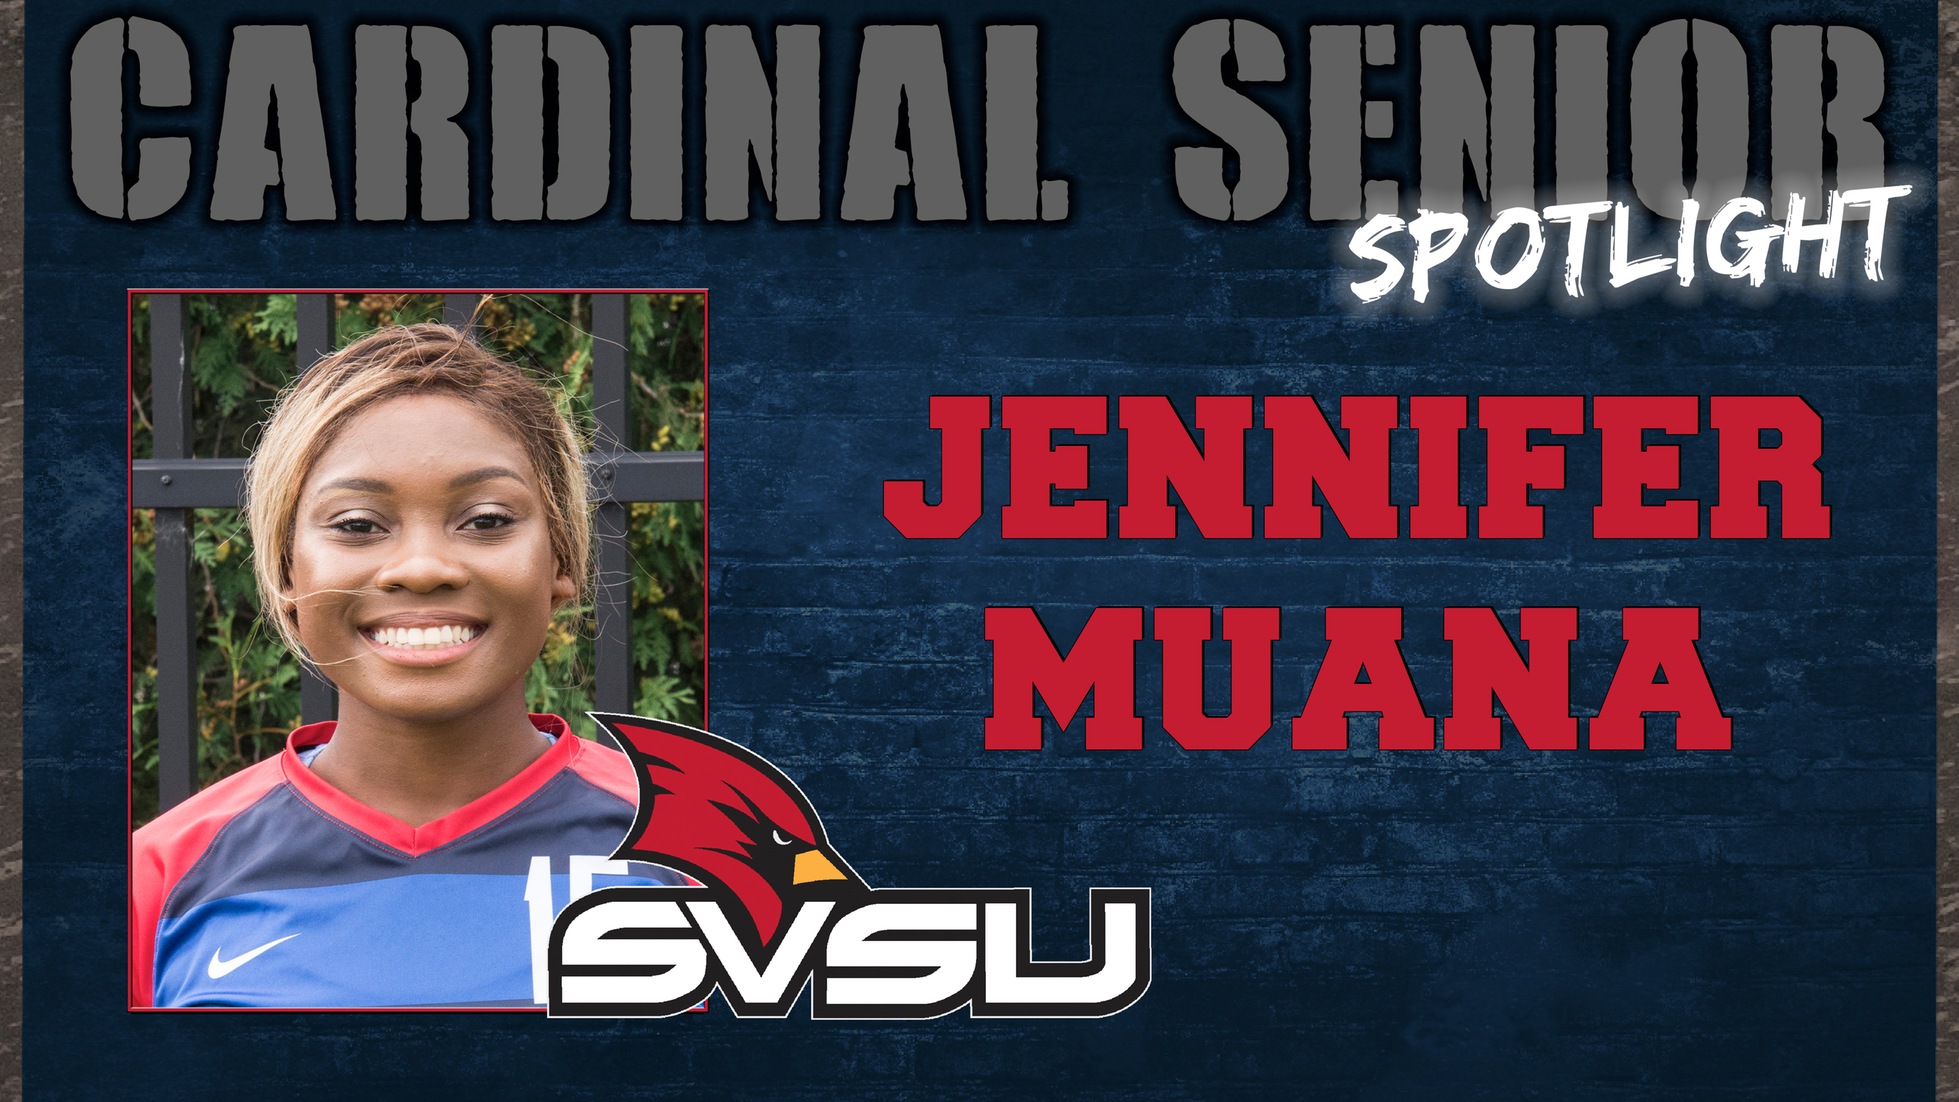 SVSU Cardinal Senior Spotlight - Jennifer Muana